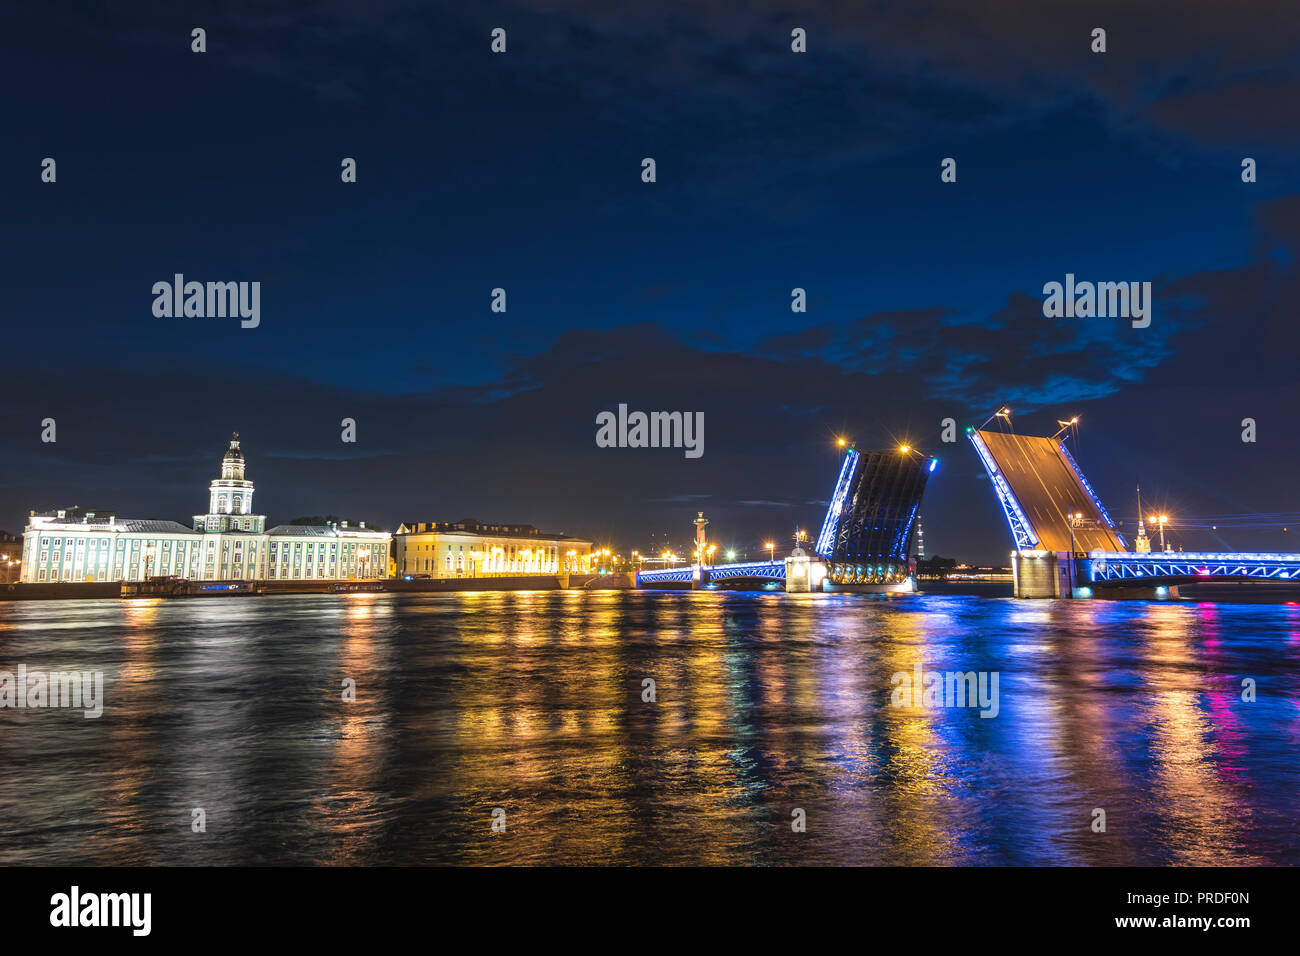 Saint Petersburg Russia, night city skyline at Palace Bridge Stock Photo